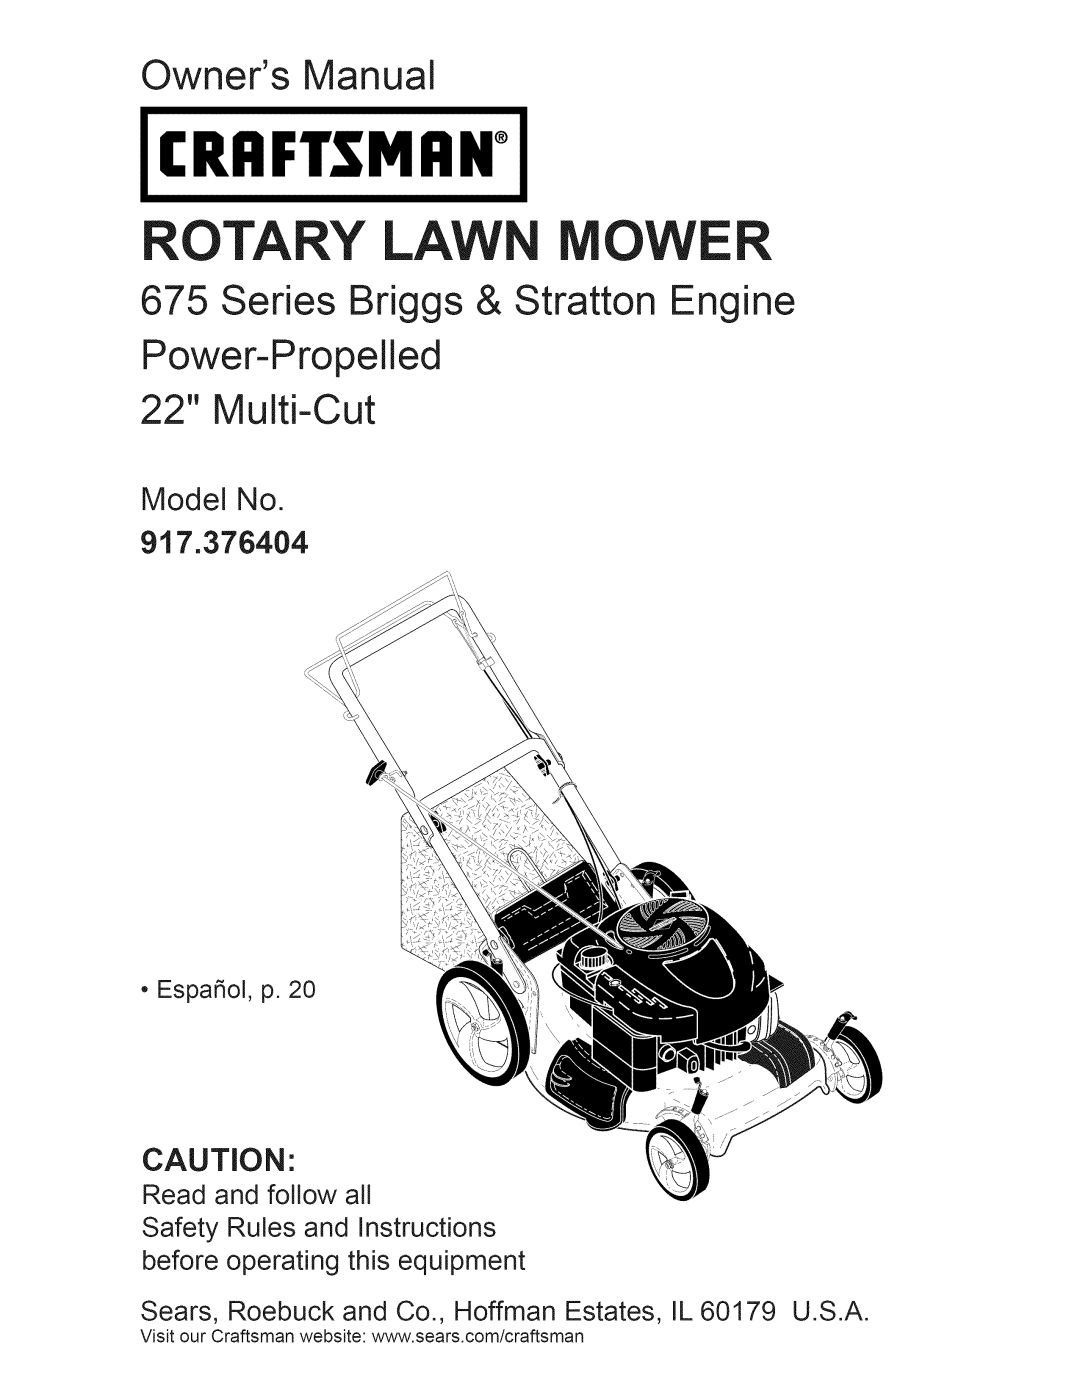 Craftsman owner manual Model No 917.376404, Craftsman, Rotary Lawn Mower, Owners Manual, Power-Propelled 22 Multi-Cut 